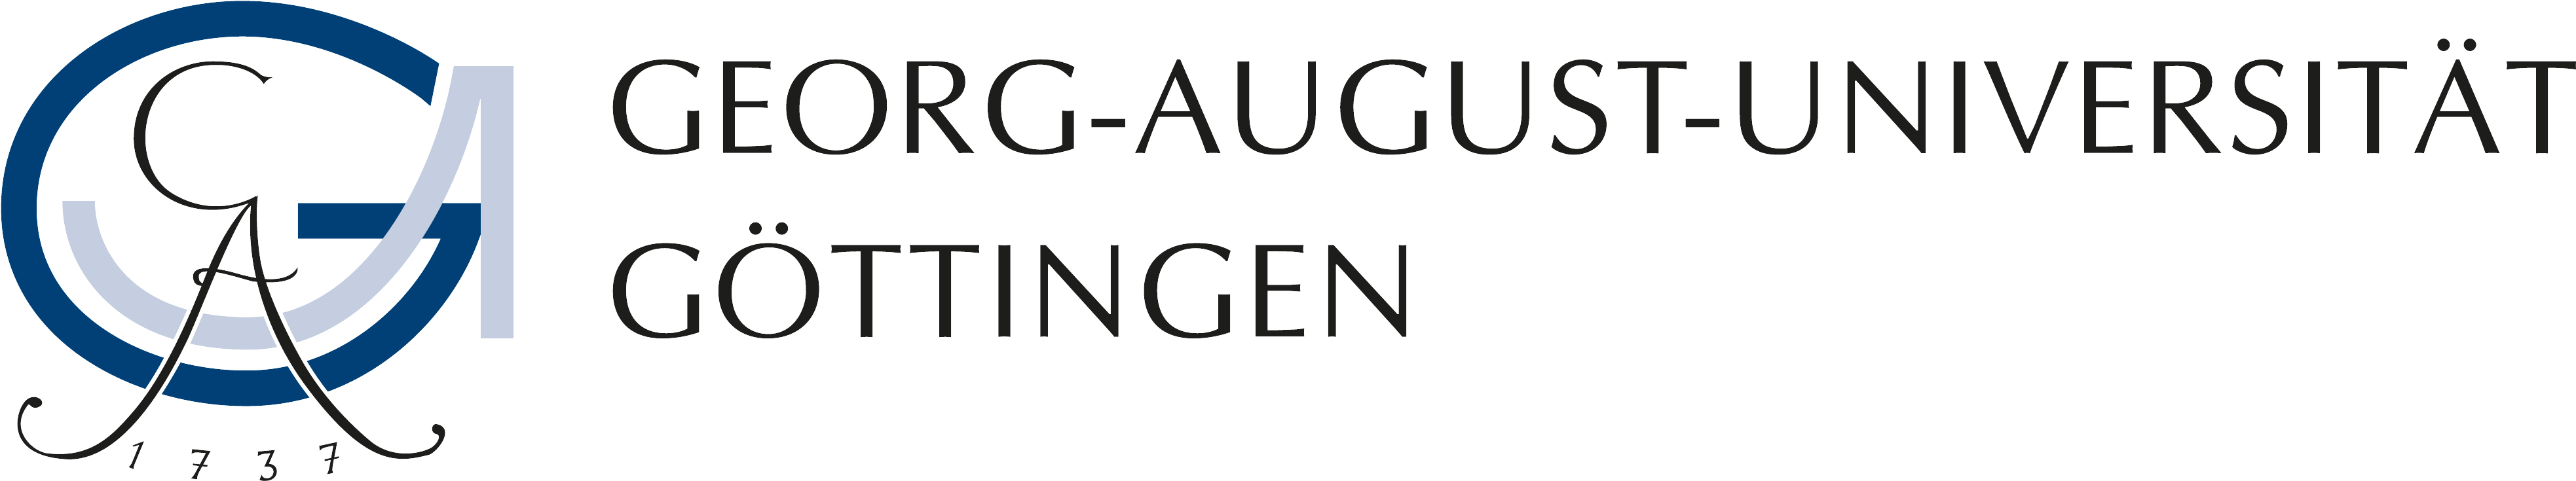 Georg-August-Universität Göttingen (UGO, Germany)